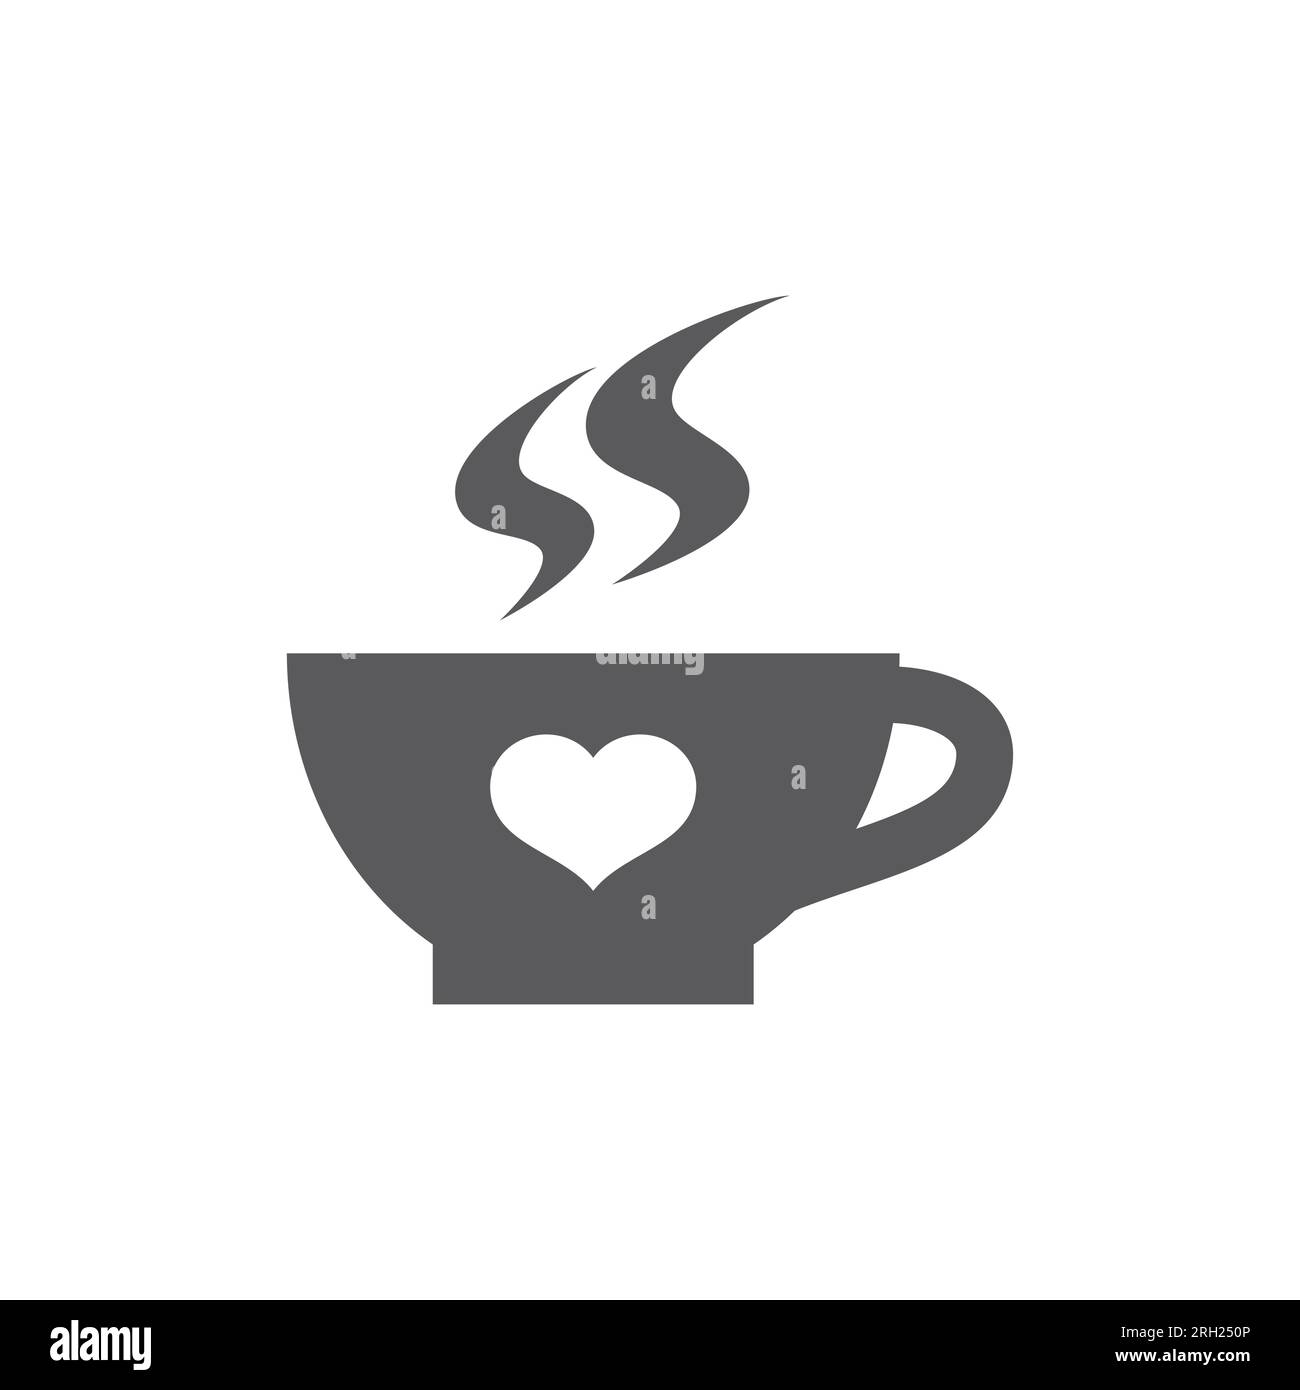 https://c8.alamy.com/comp/2RH250P/coffee-or-tea-cup-with-heart-vector-icon-hot-mug-filled-symbol-2RH250P.jpg